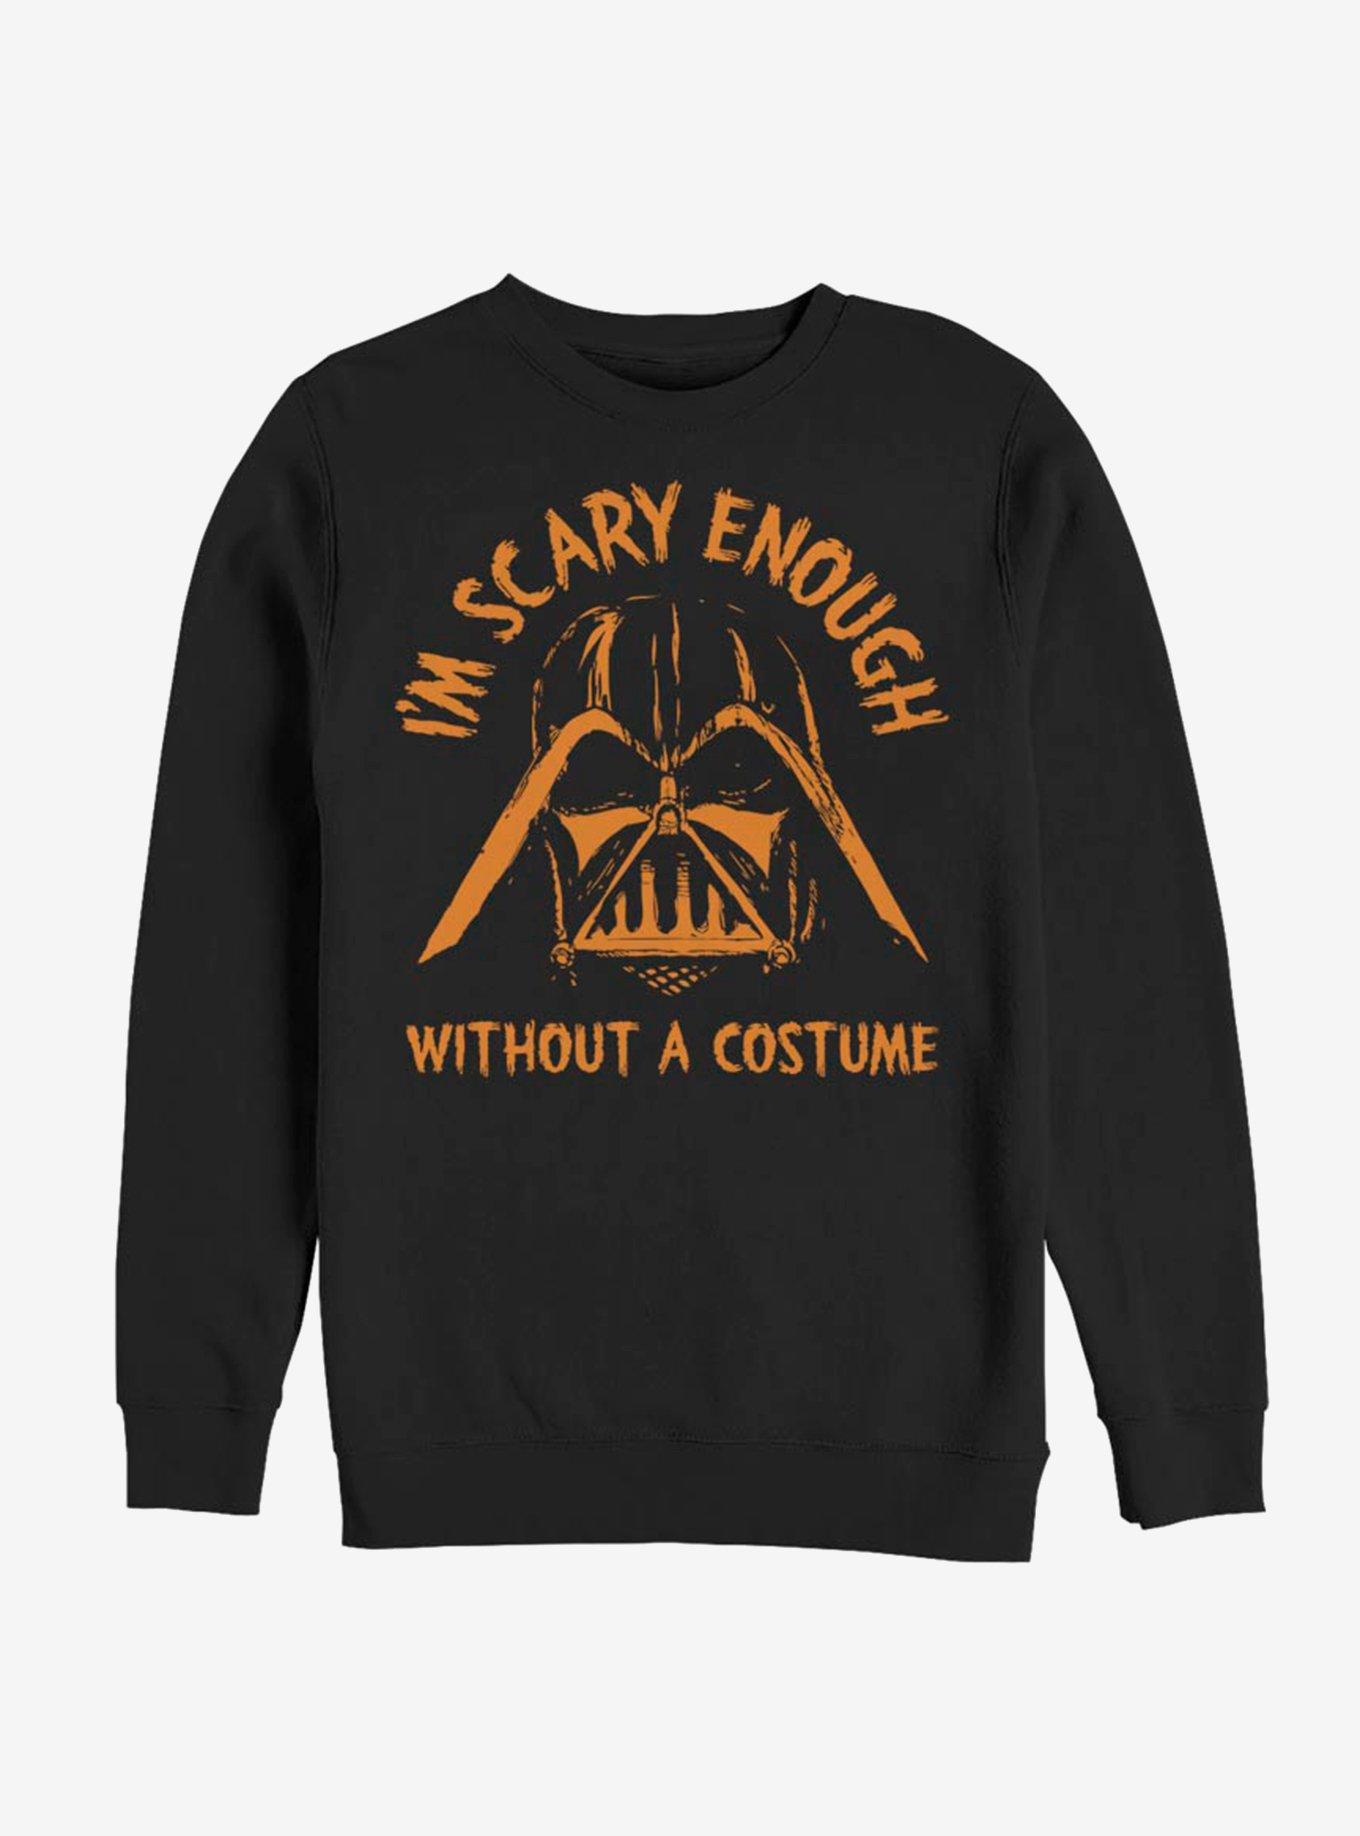 Star Wars I'm Scary Enough Sweatshirt, BLACK, hi-res